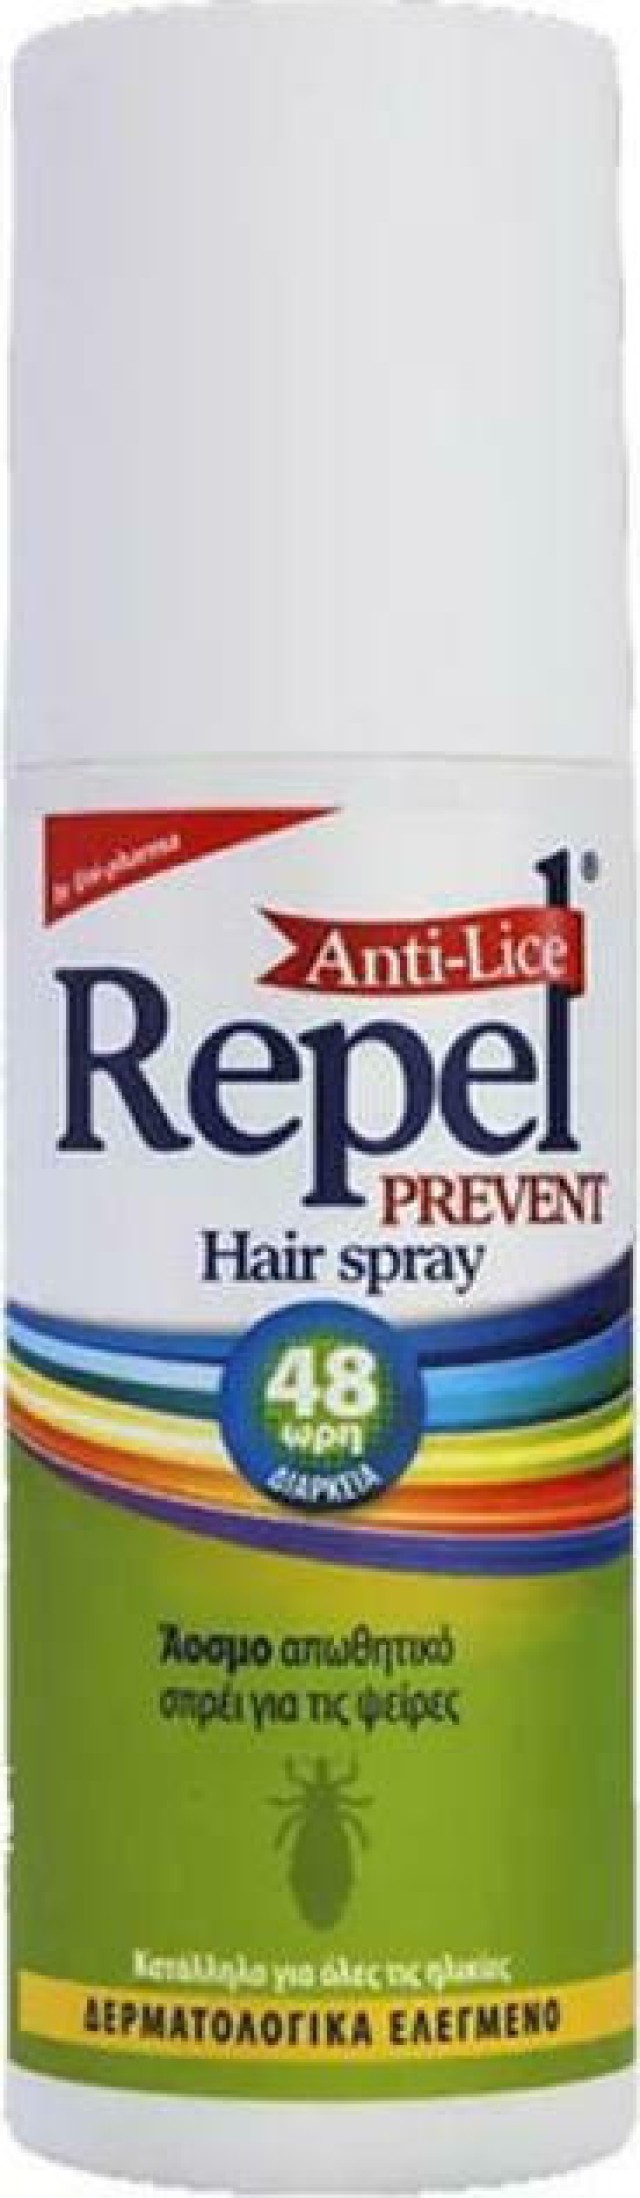 Repel Anti-lice Prevent Hair Spray Άοσμο Απωθητικό Αντιφθειρικό Σπρέι, 150ml